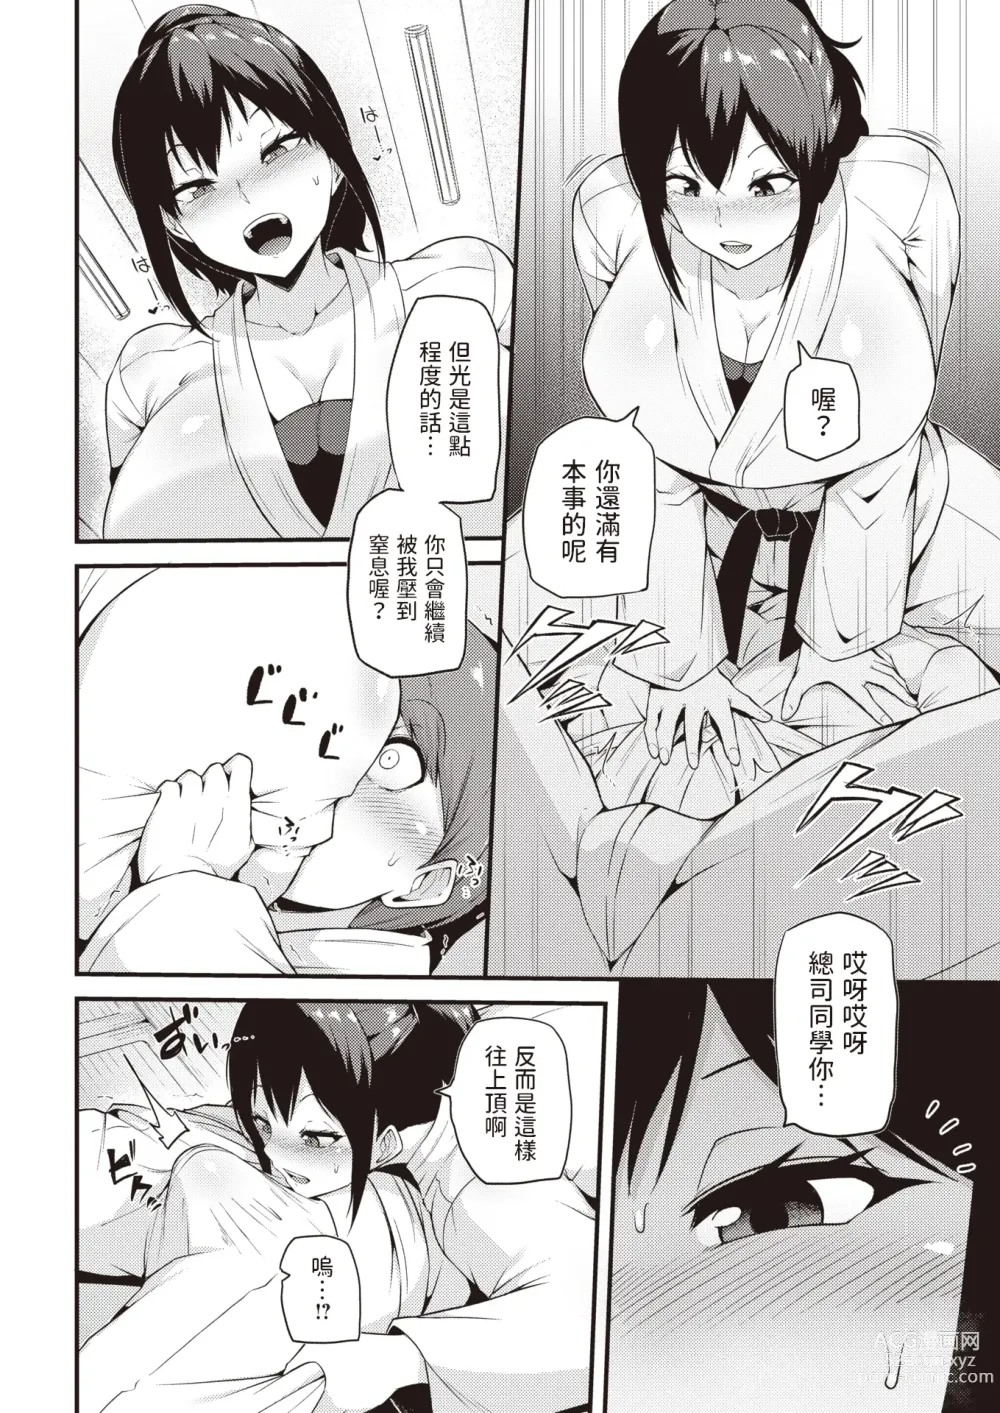 Page 8 of manga Futari de Keiko